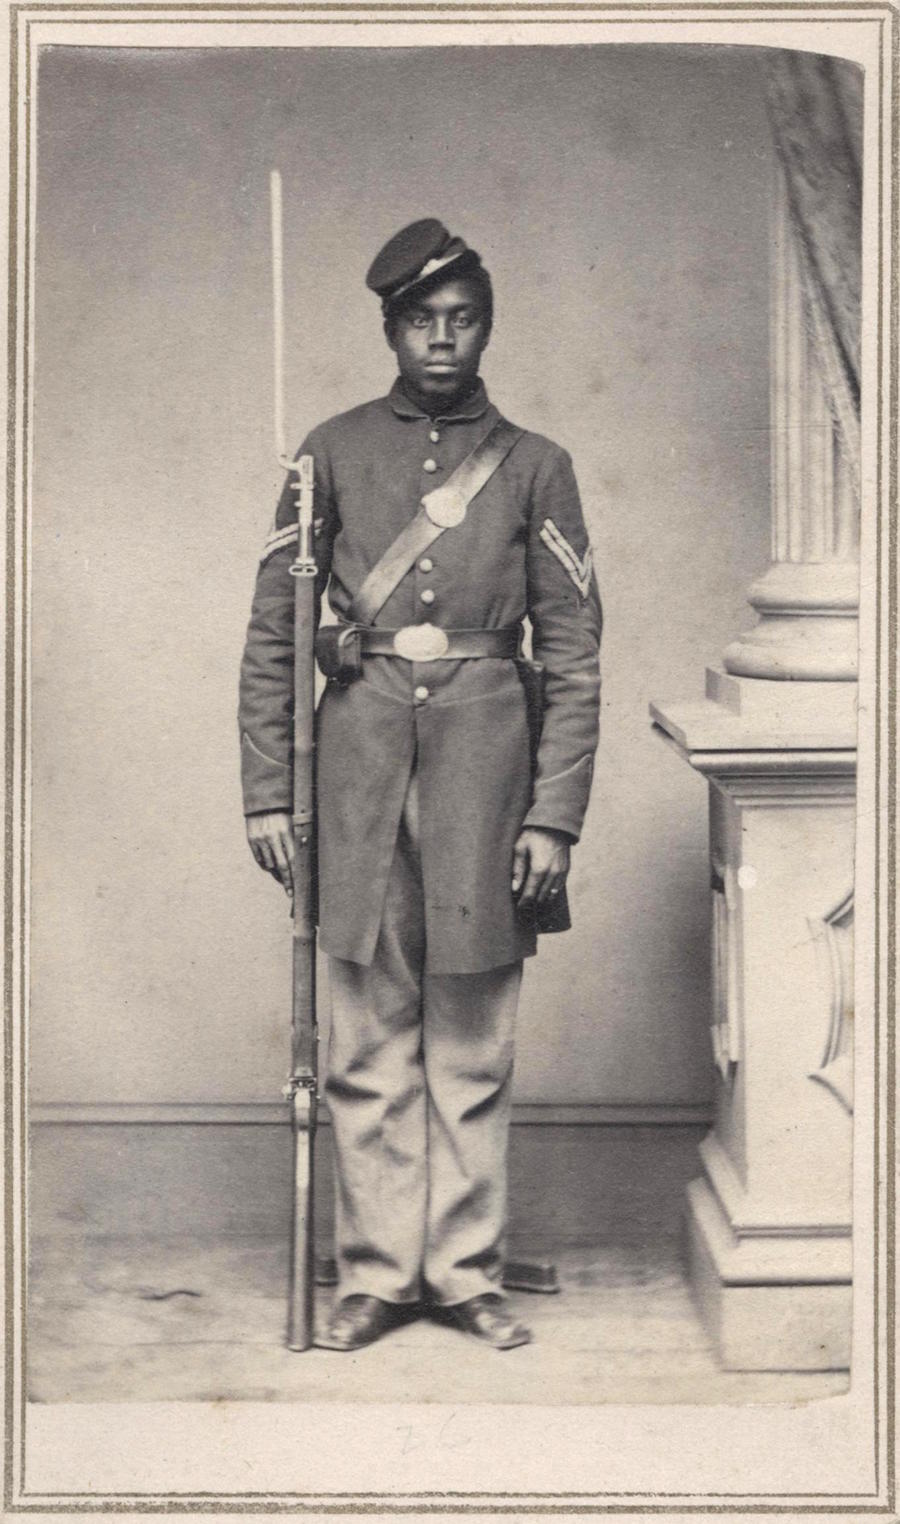 Founders Day, American Civil War, United Bureau of Colored Troops, KOLUMN Magazine, Kolumn